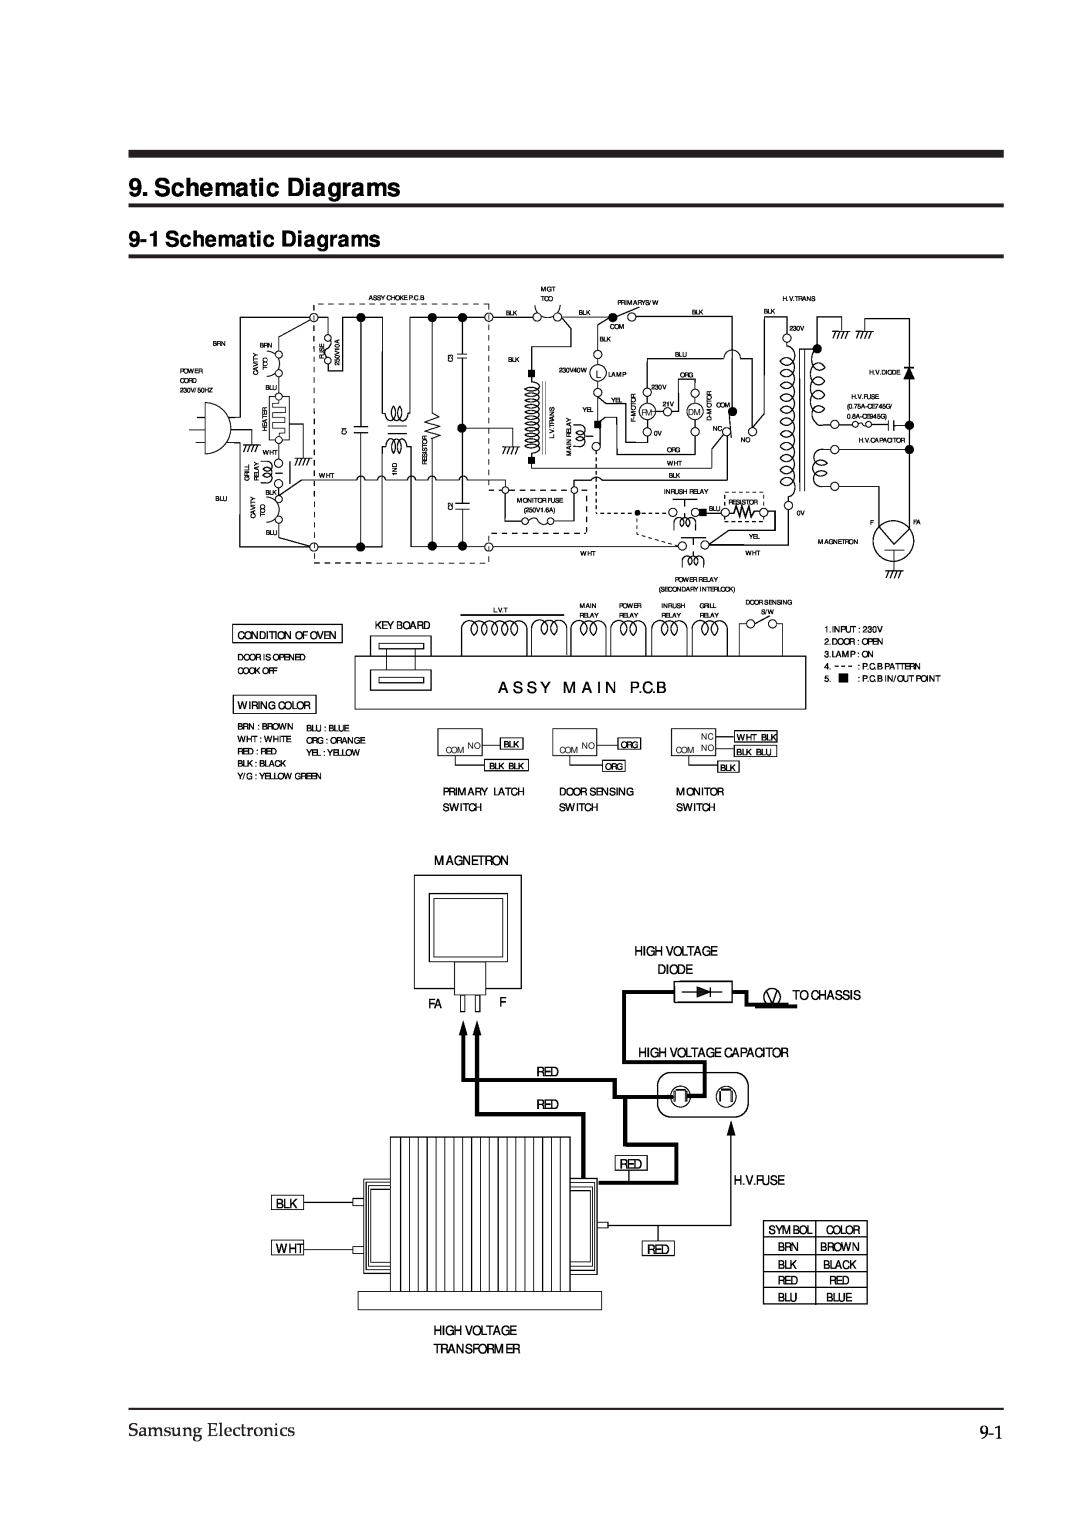 Samsung CE745GR service manual Schematic Diagrams, A S S Y M A I N P.C.B 